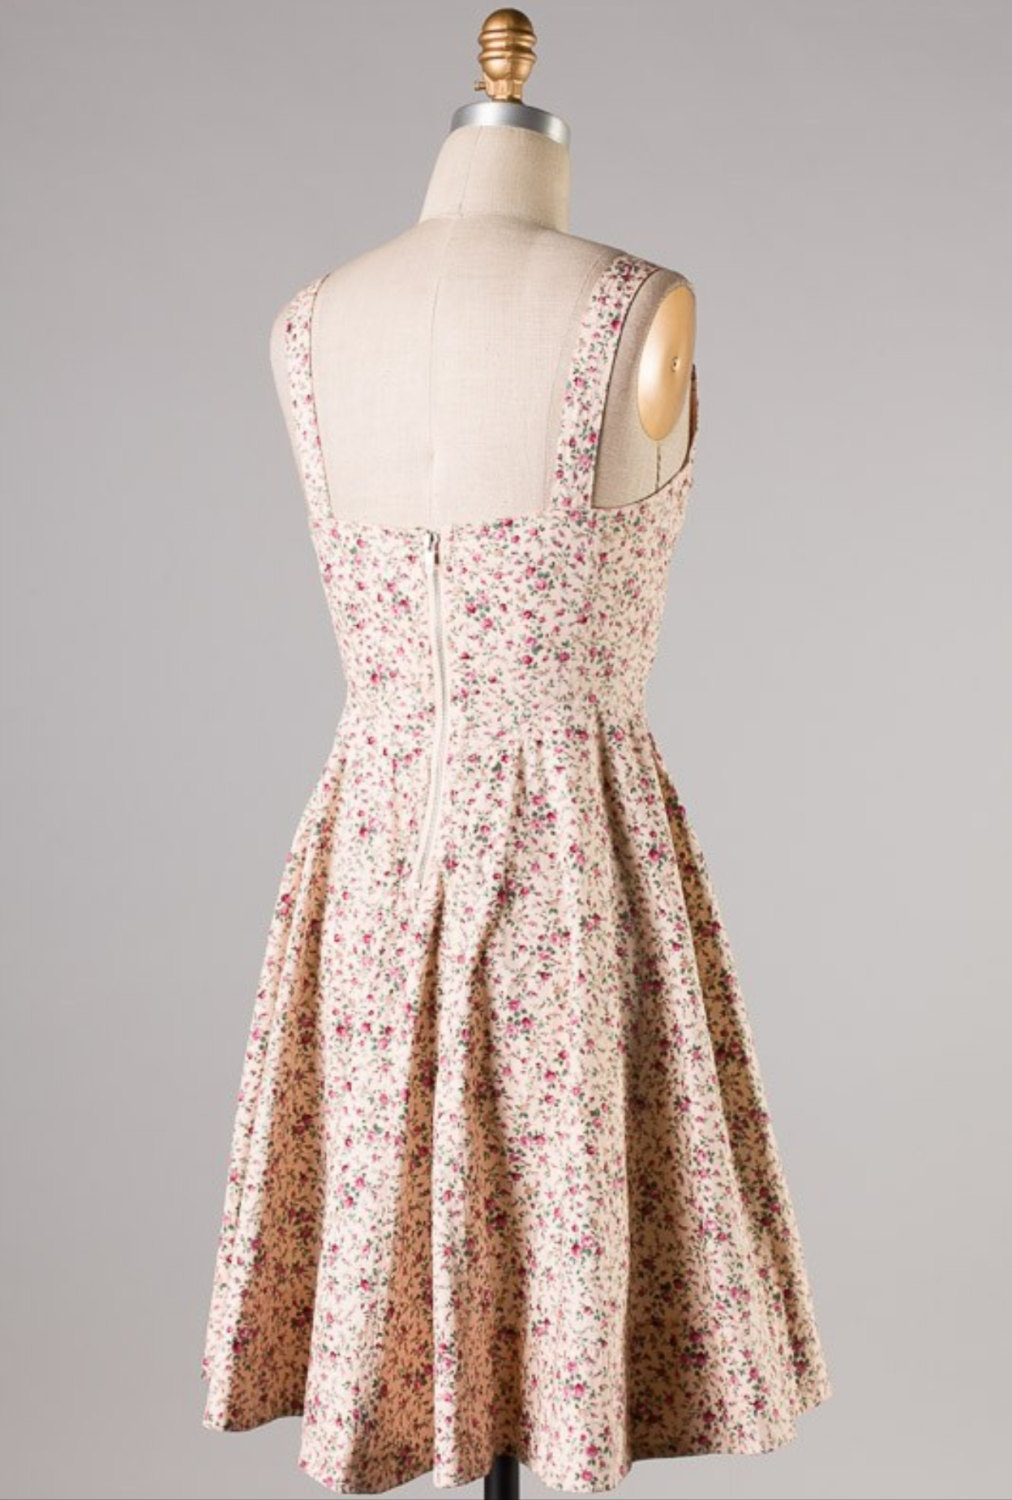 Sleeveless Empire Neckline Floral Printed Dress.Summer Dress,Chiffon ...